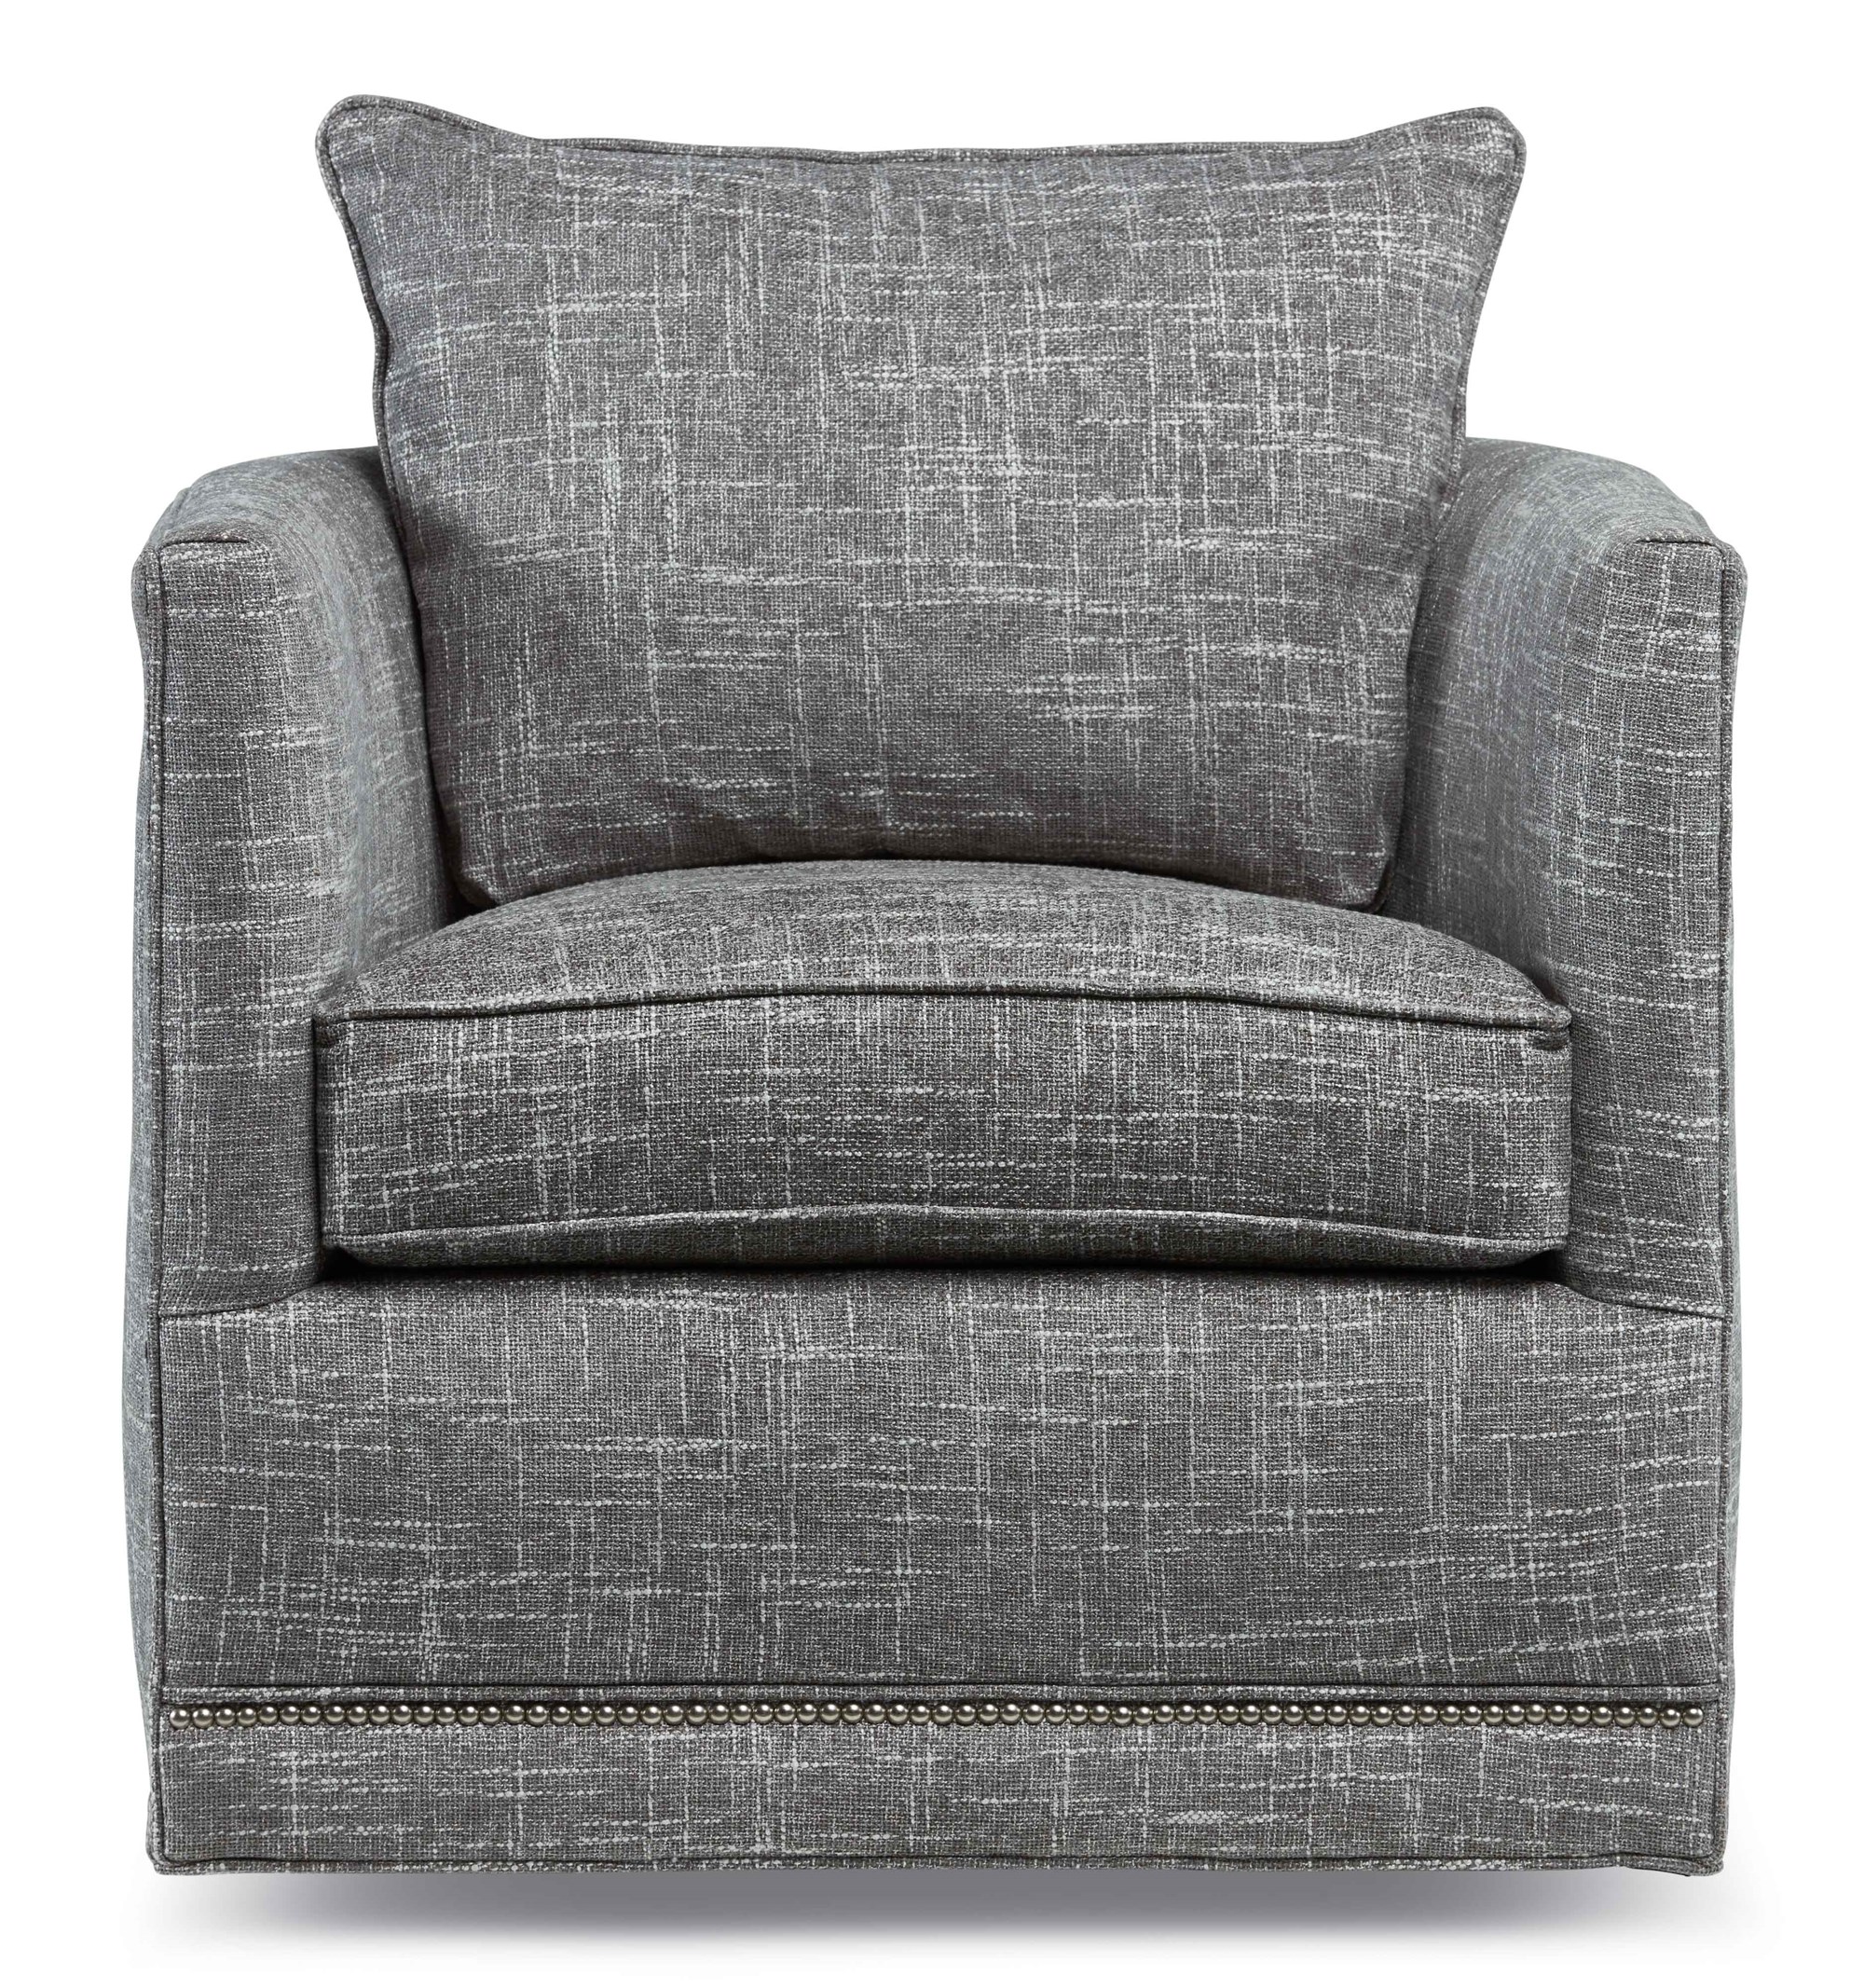 Aura Swivel Chair : living room furnishings Stucky hooker chairs chaises : hf & & : Robb 